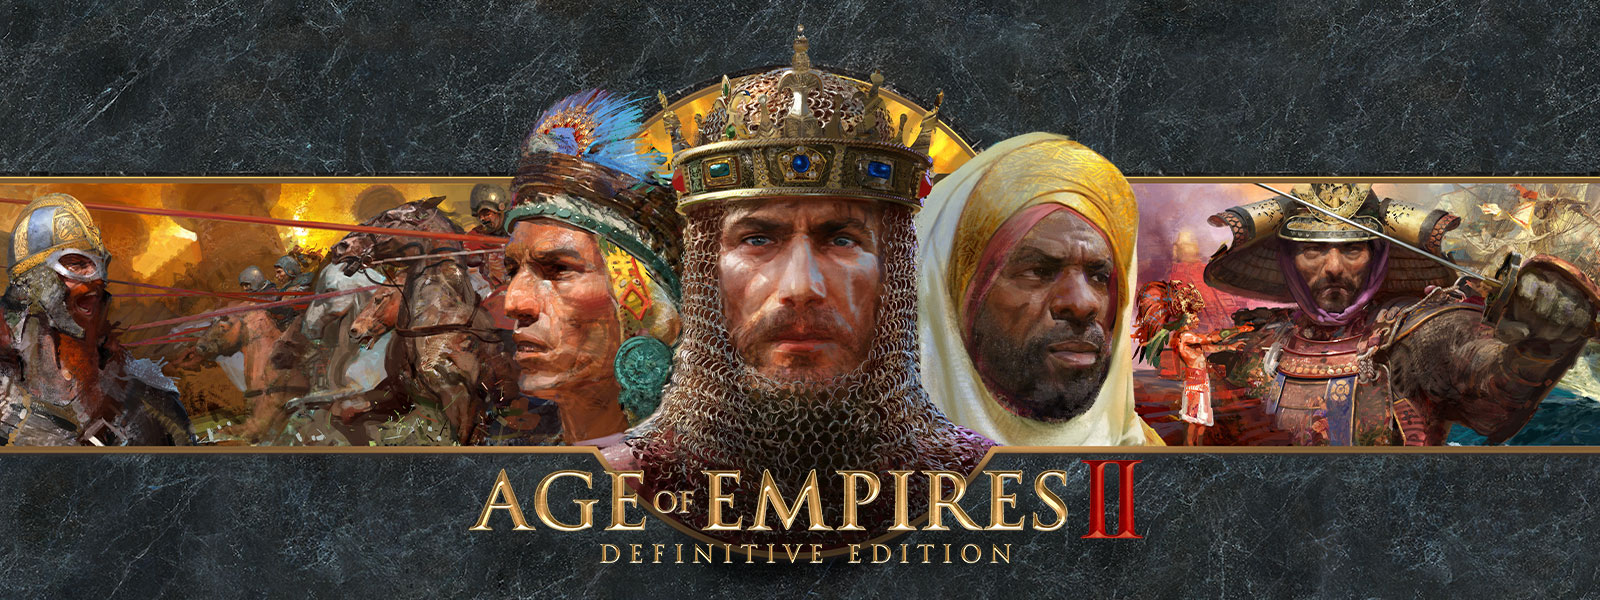 包括戰爭領袖及其軍隊的灰色板岩背景中的 Age of Empires II: Definitive Edition 標誌